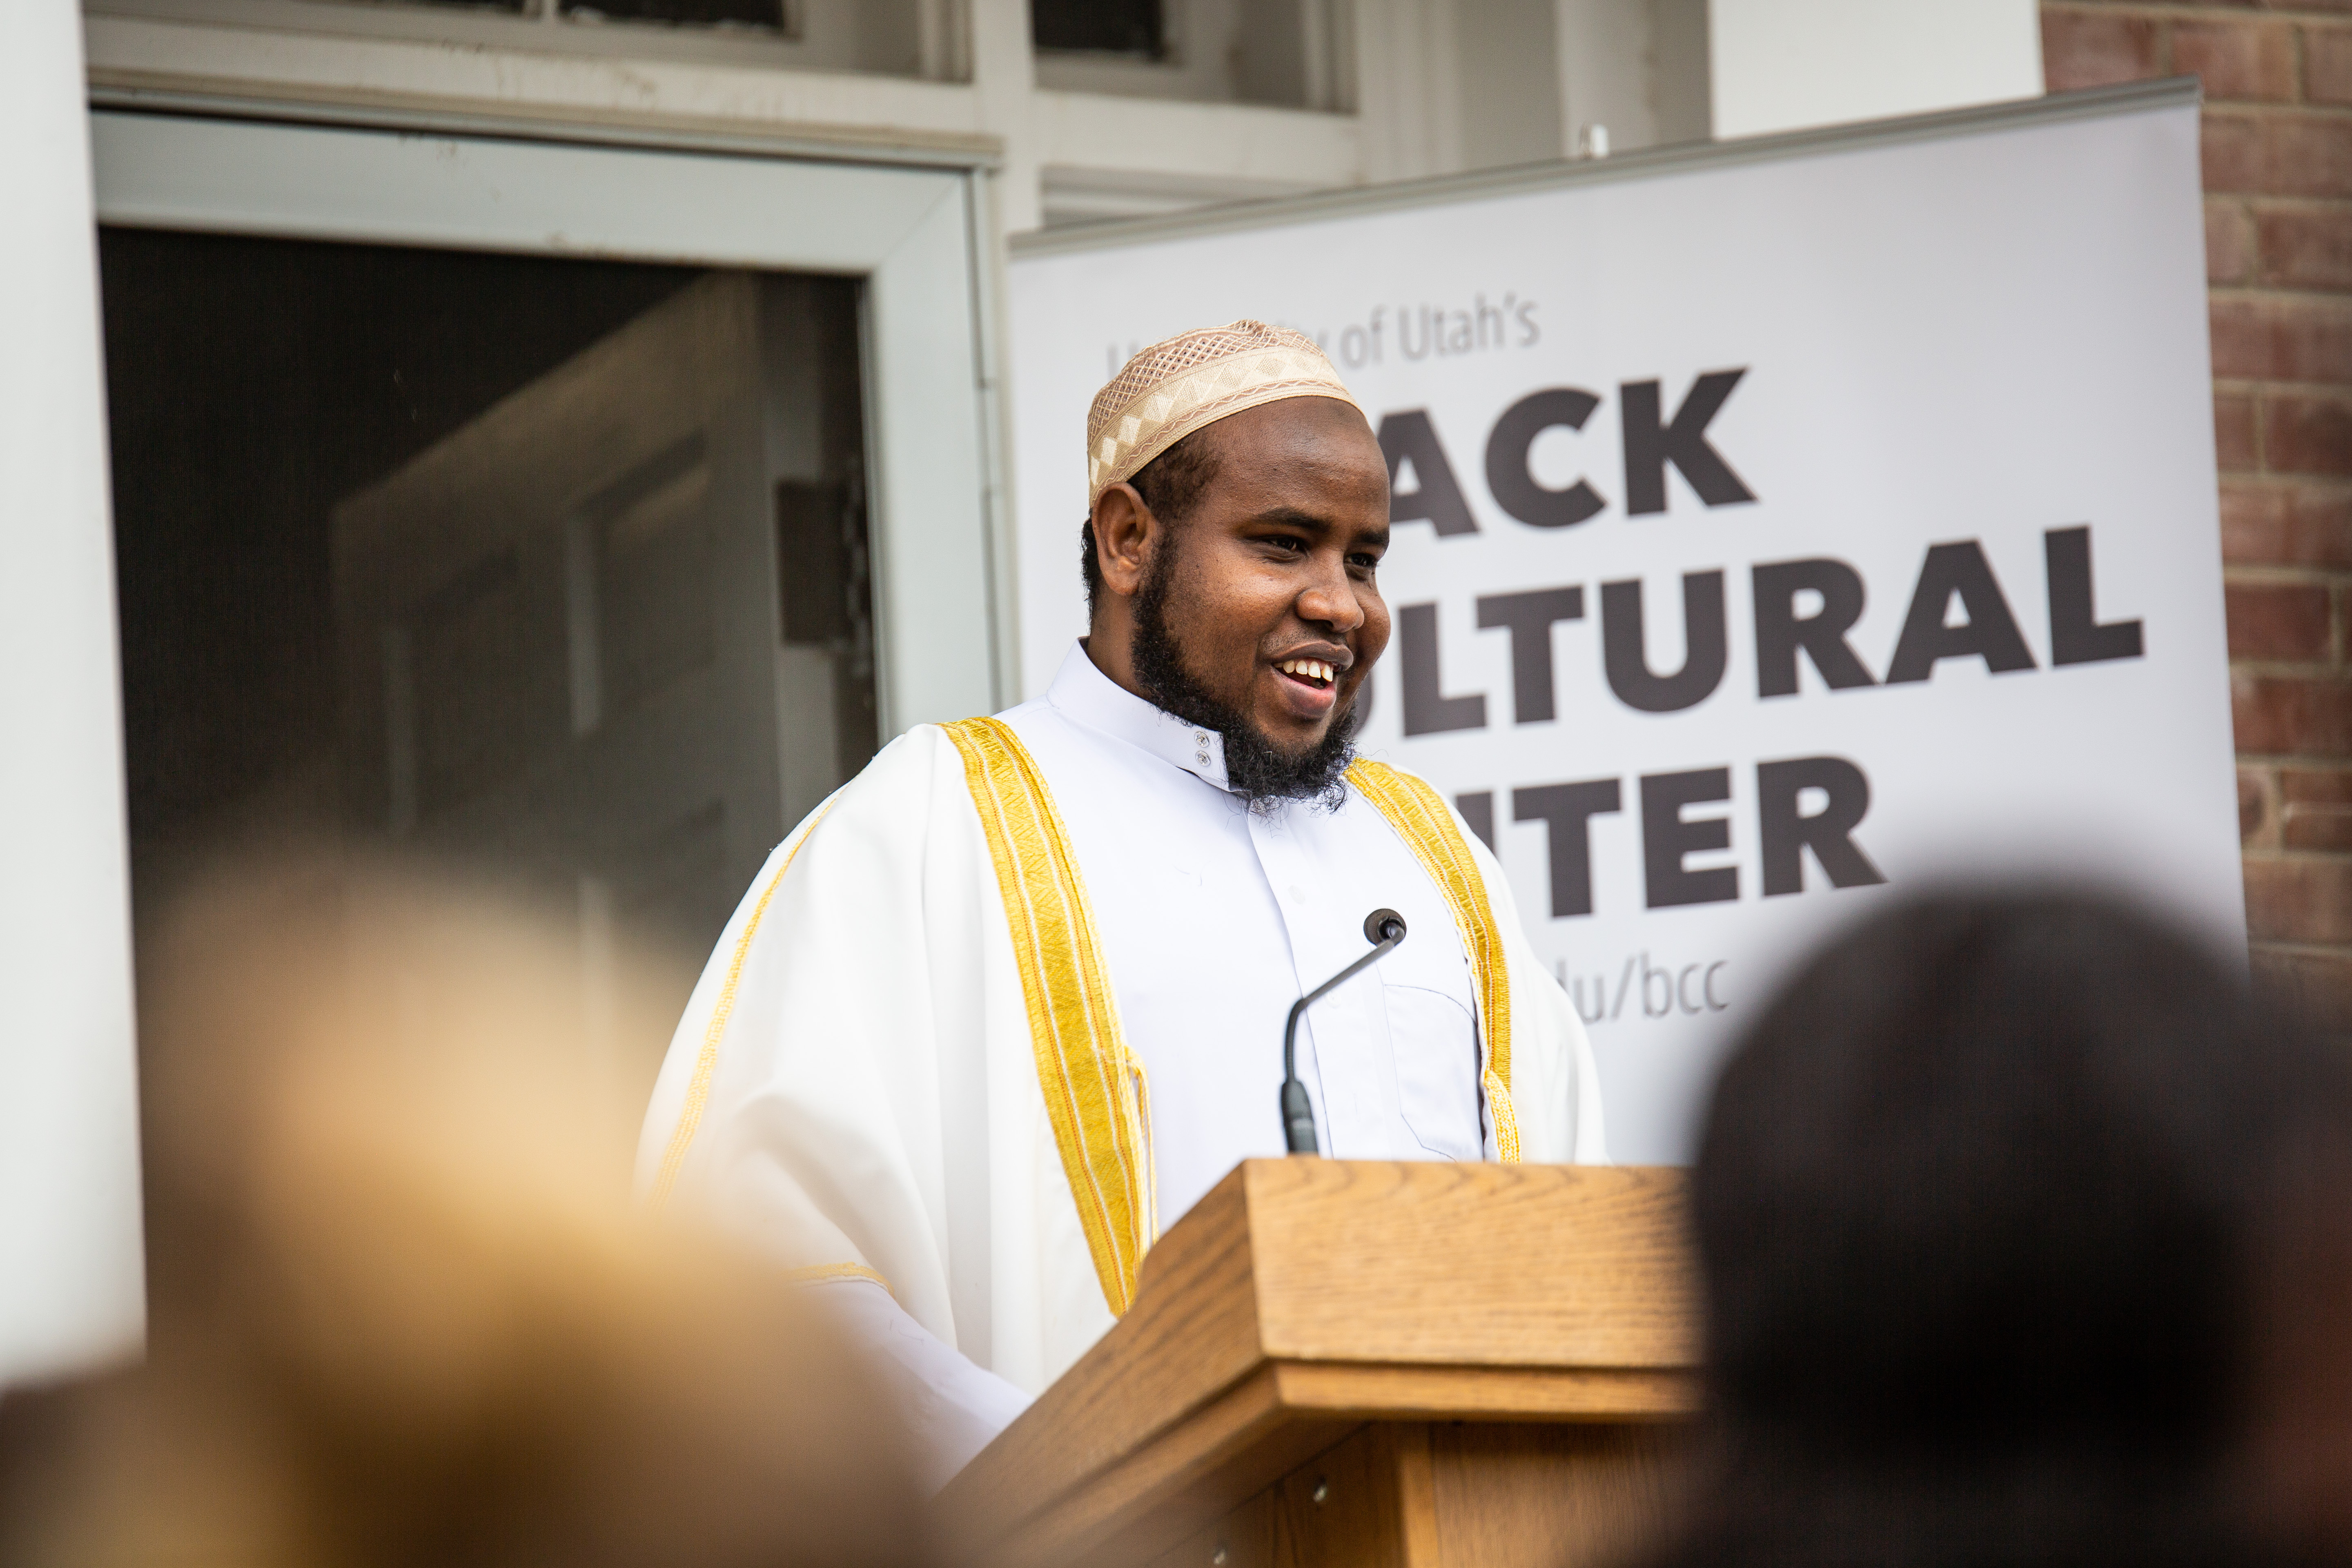 Sheikh Yussuf Abdi, Imam of the Madina Mosque speaks at the Black Cultural Center in Salt Lake City, Utah University of Utah, 95 Fort Douglas Blvd. (Bldg. 603)